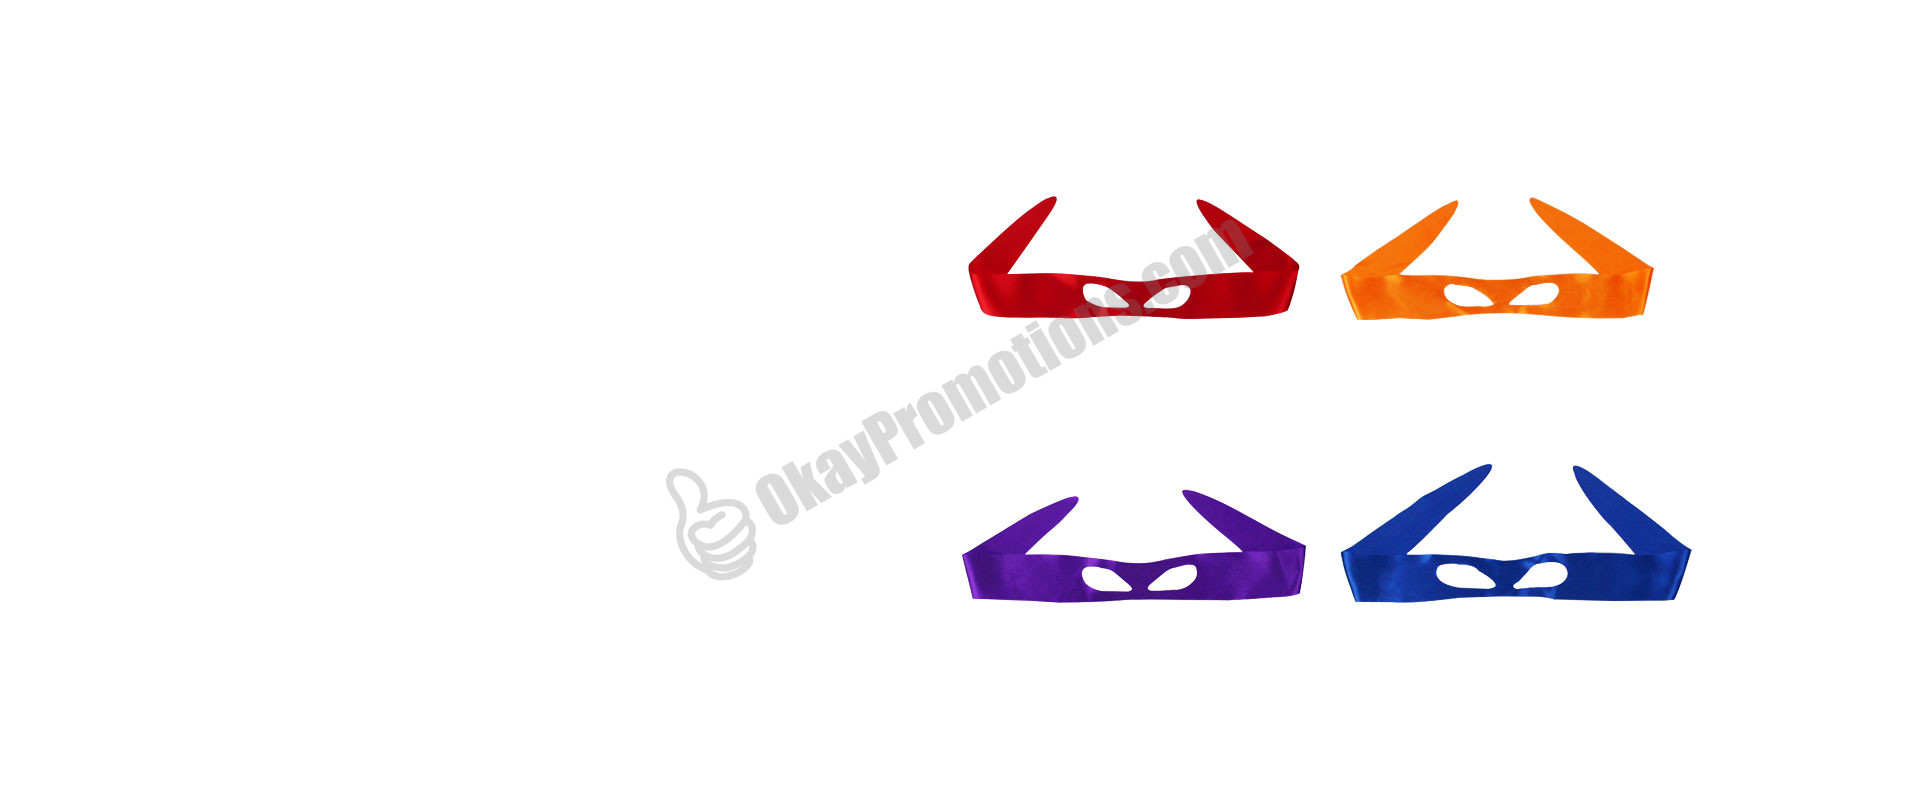 Satin-Logo-Imprinted-Promotional-Ninja-Masks-Sales-Marketing-Advertising-Gifts